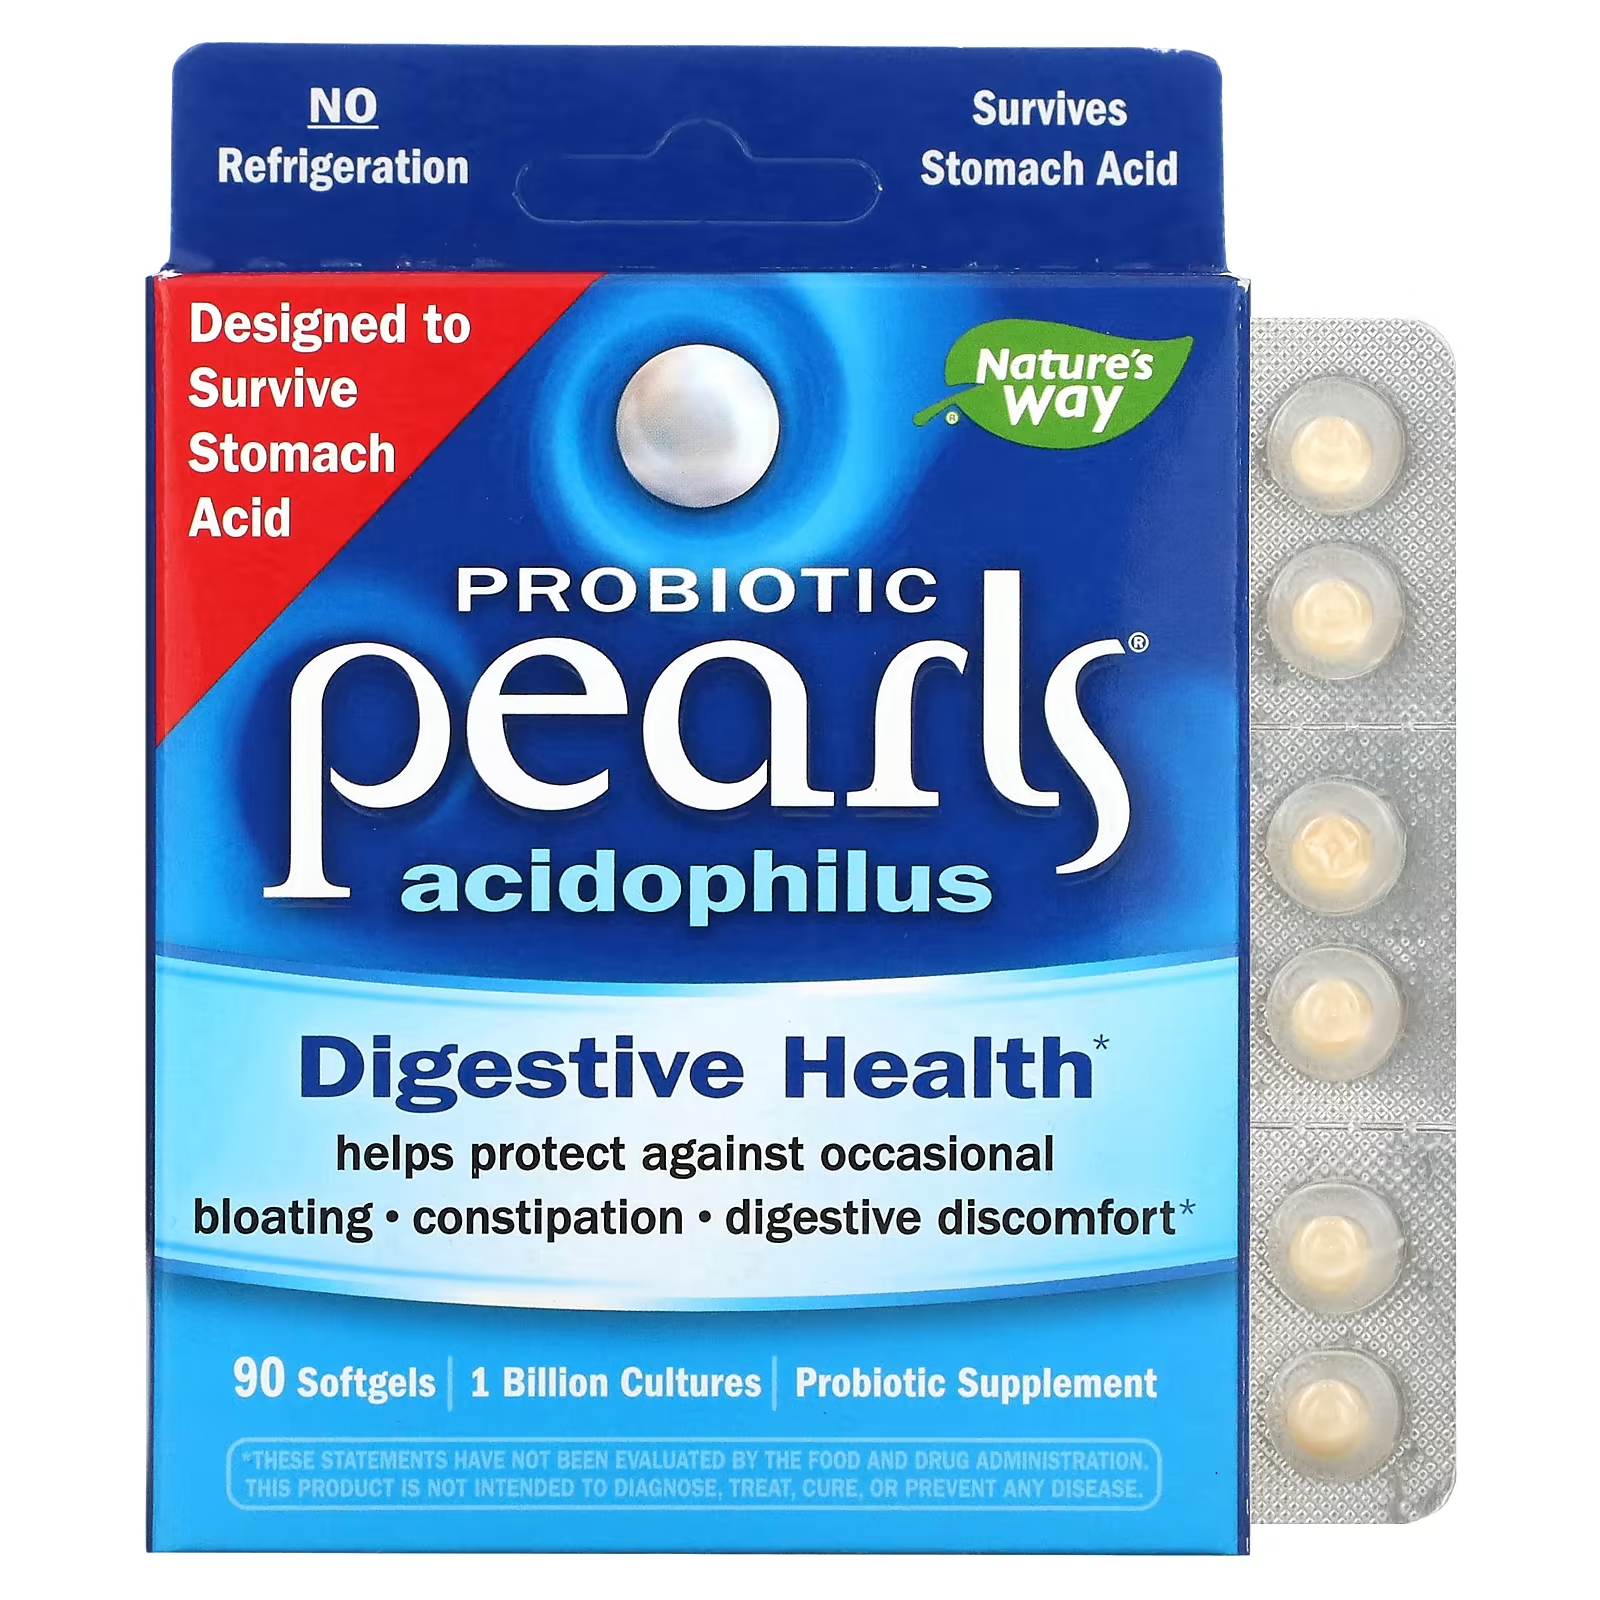 Nature's Way Пробиотические жемчужины Acidophilus, 1 миллиард КОЕ, 90 мягких таблеток